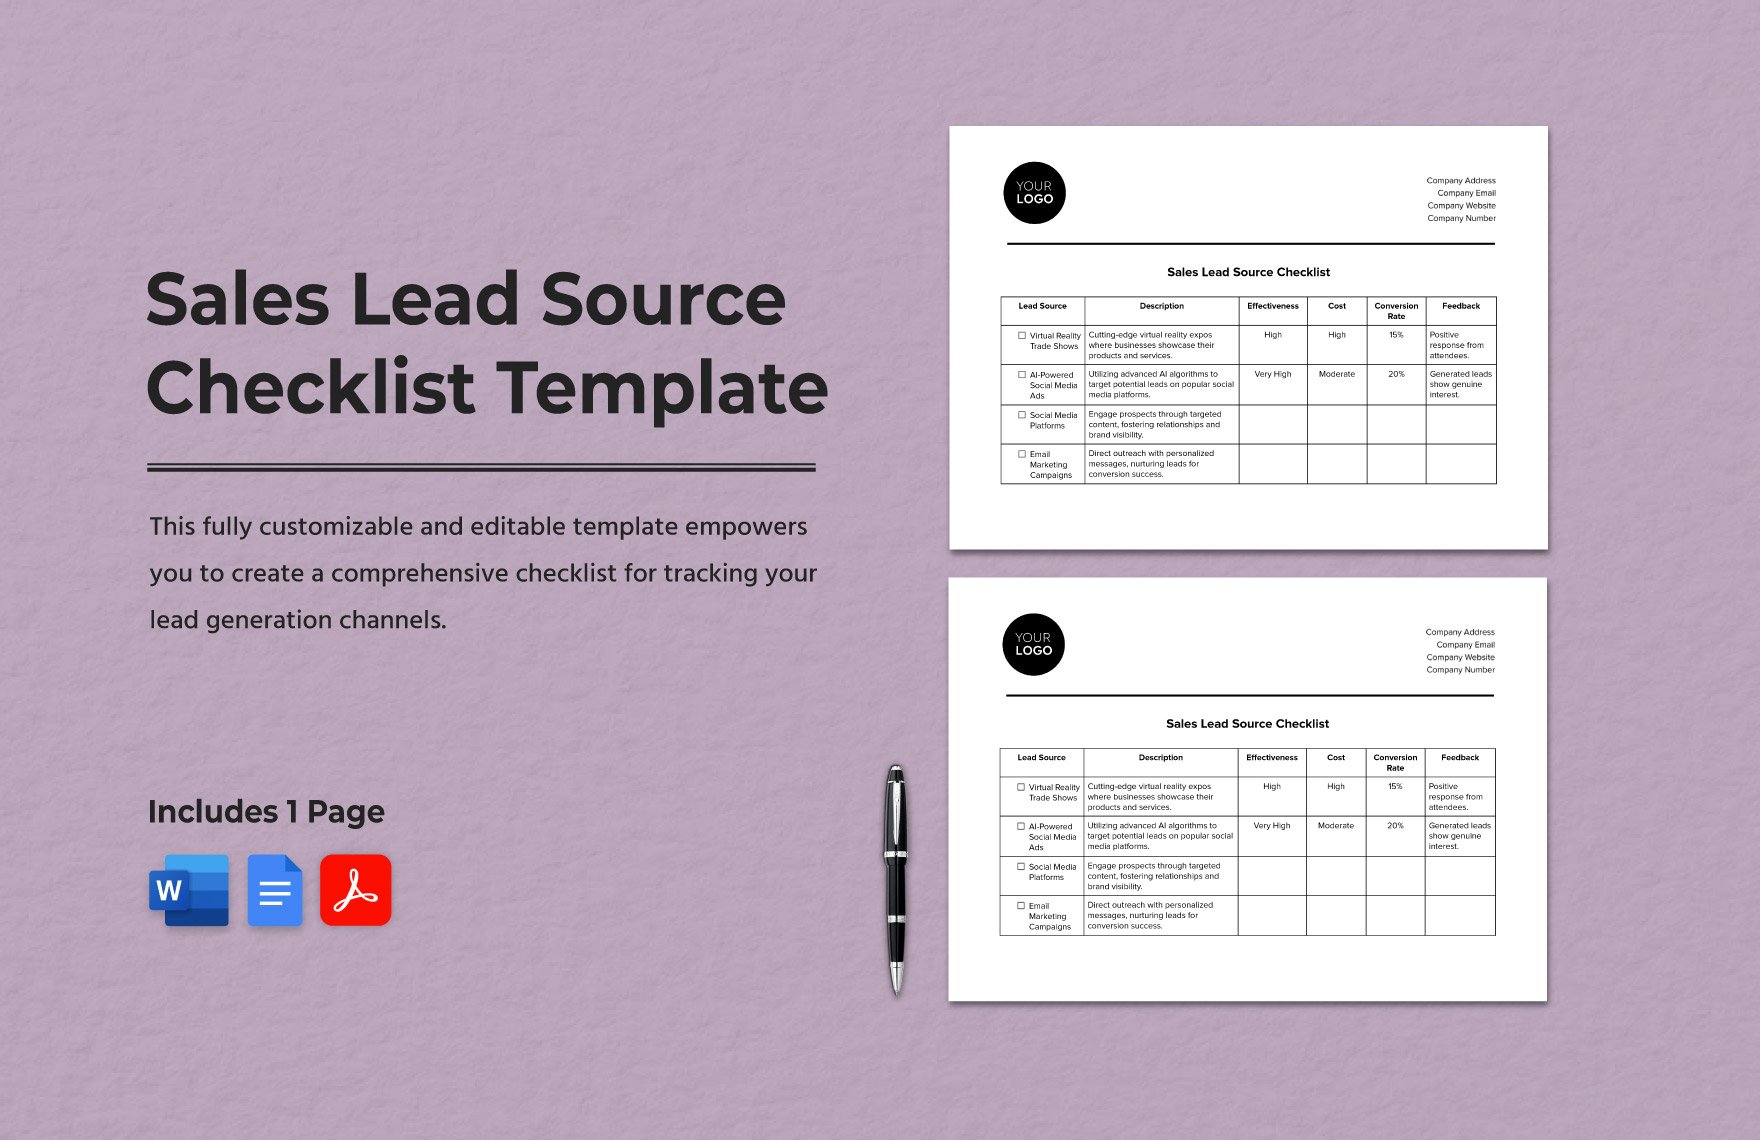 Sales Lead Source Checklist Template